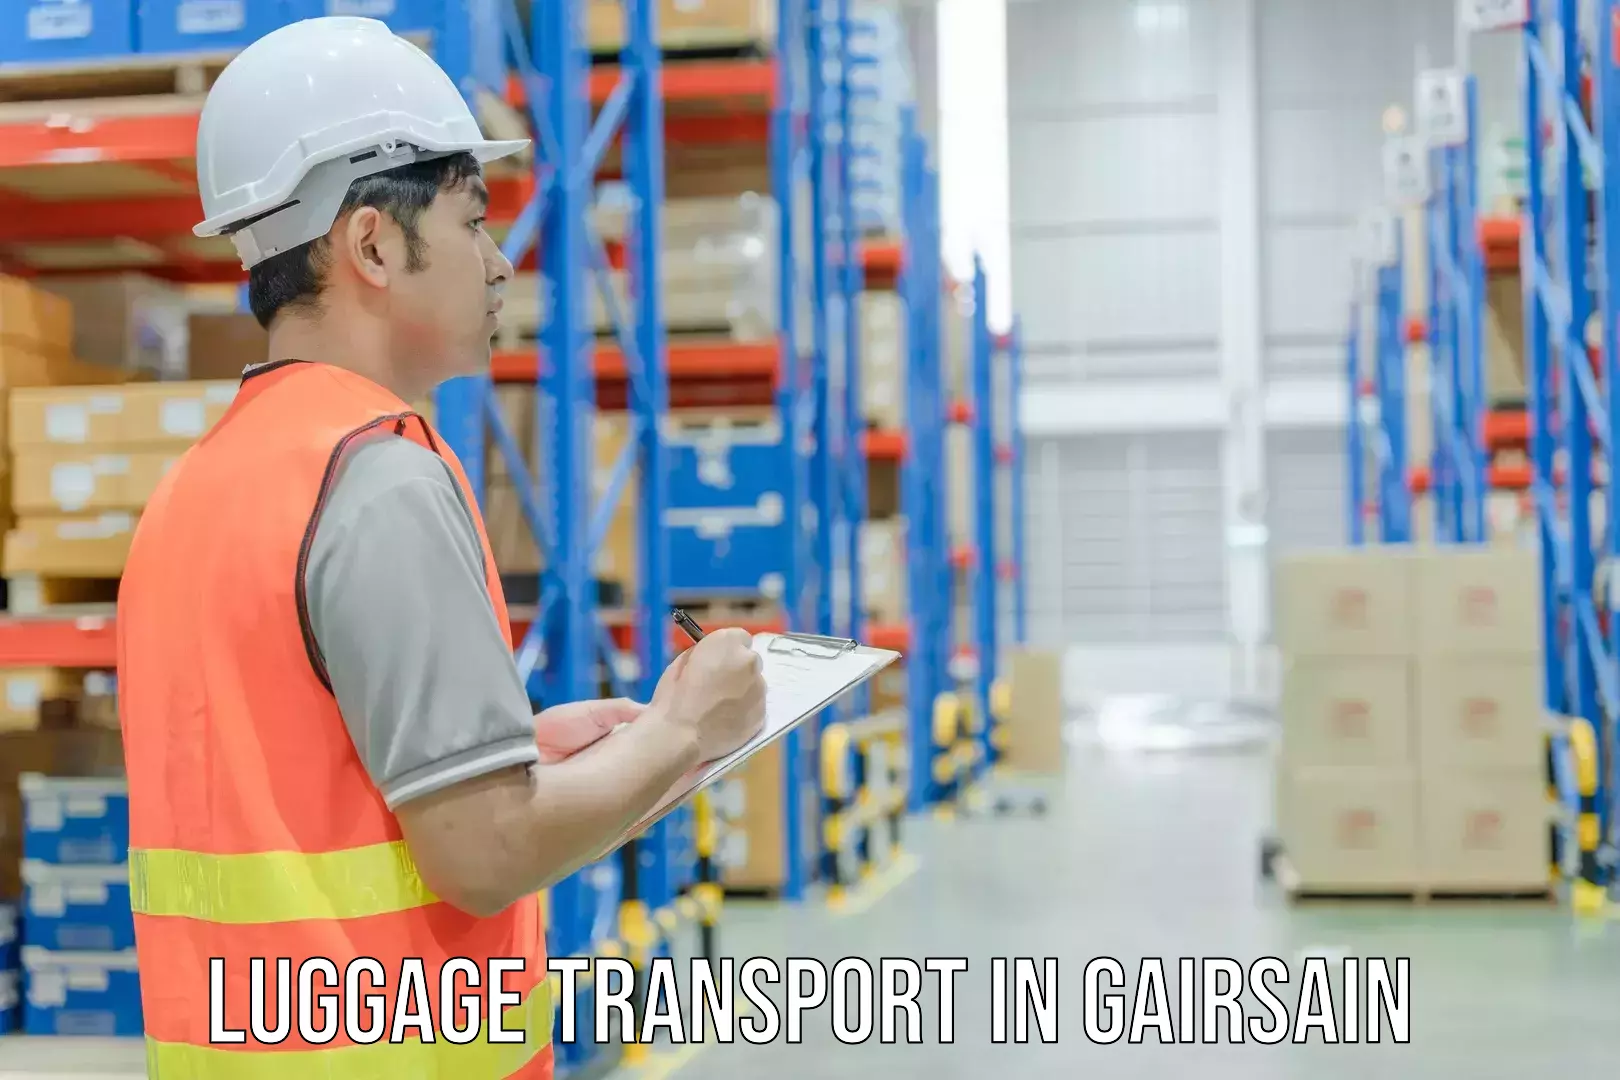 Luggage transport consulting in Gairsain